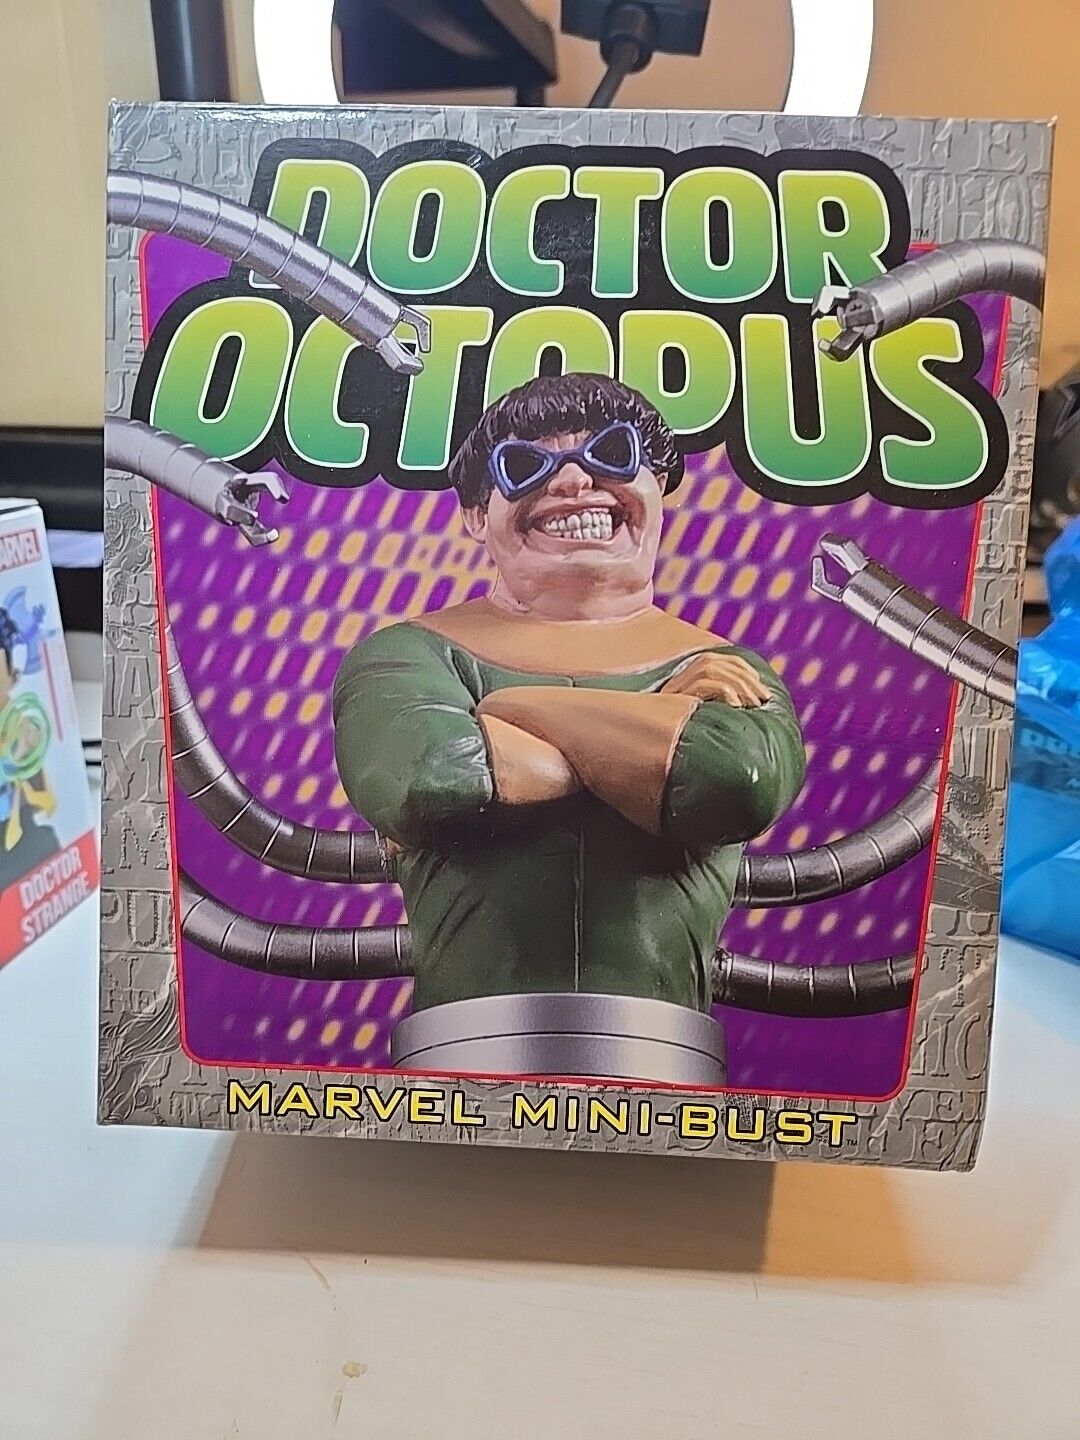 Marvel Doctor Octopus mini bust